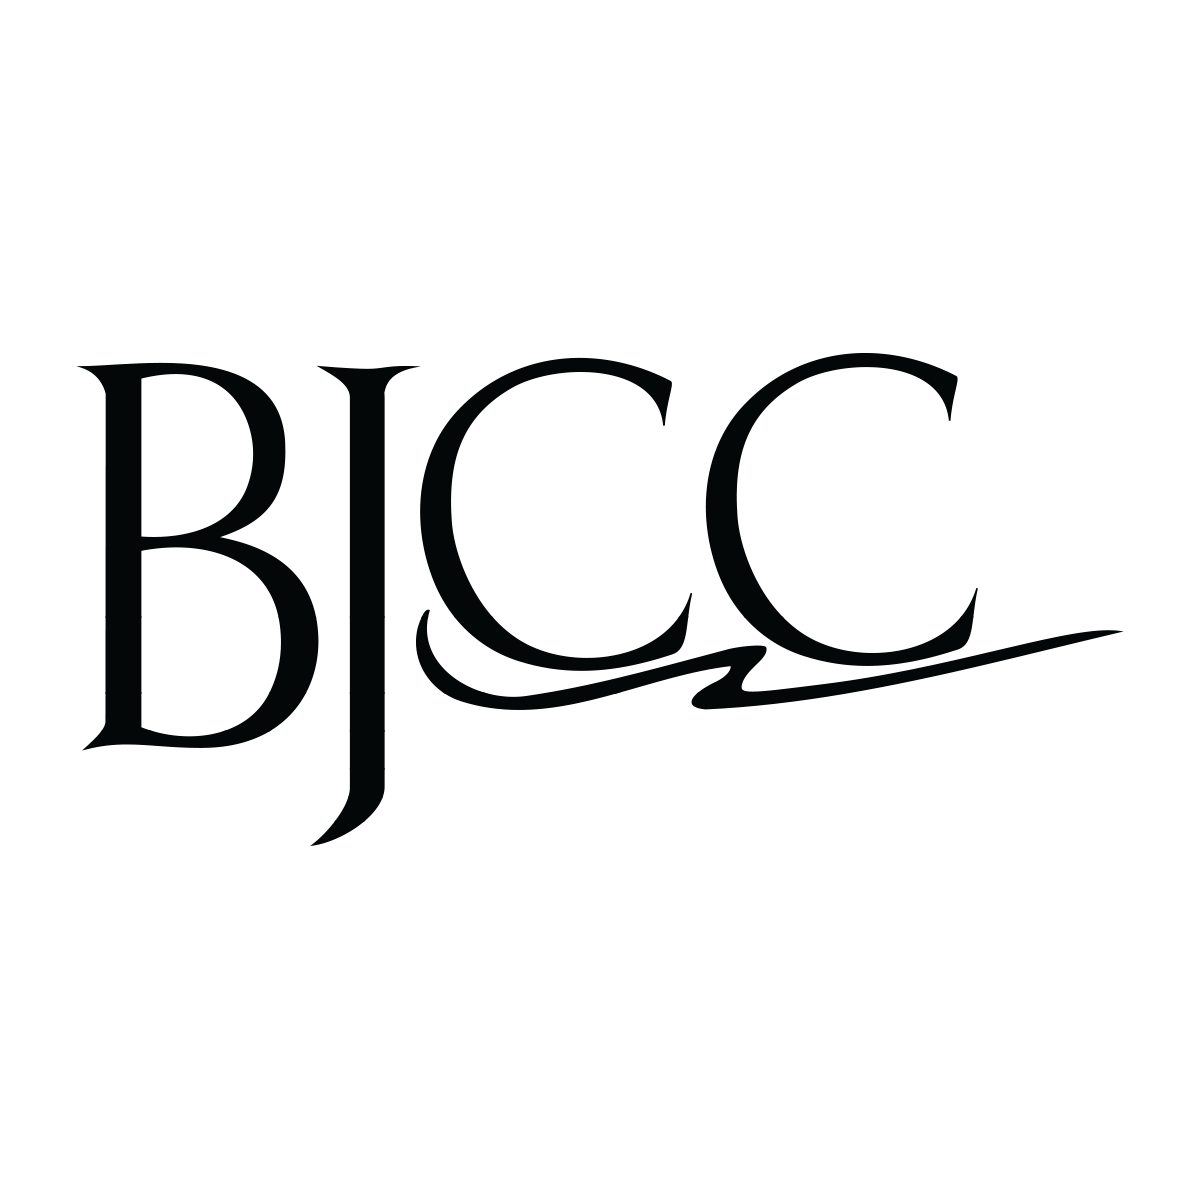 The BJCC